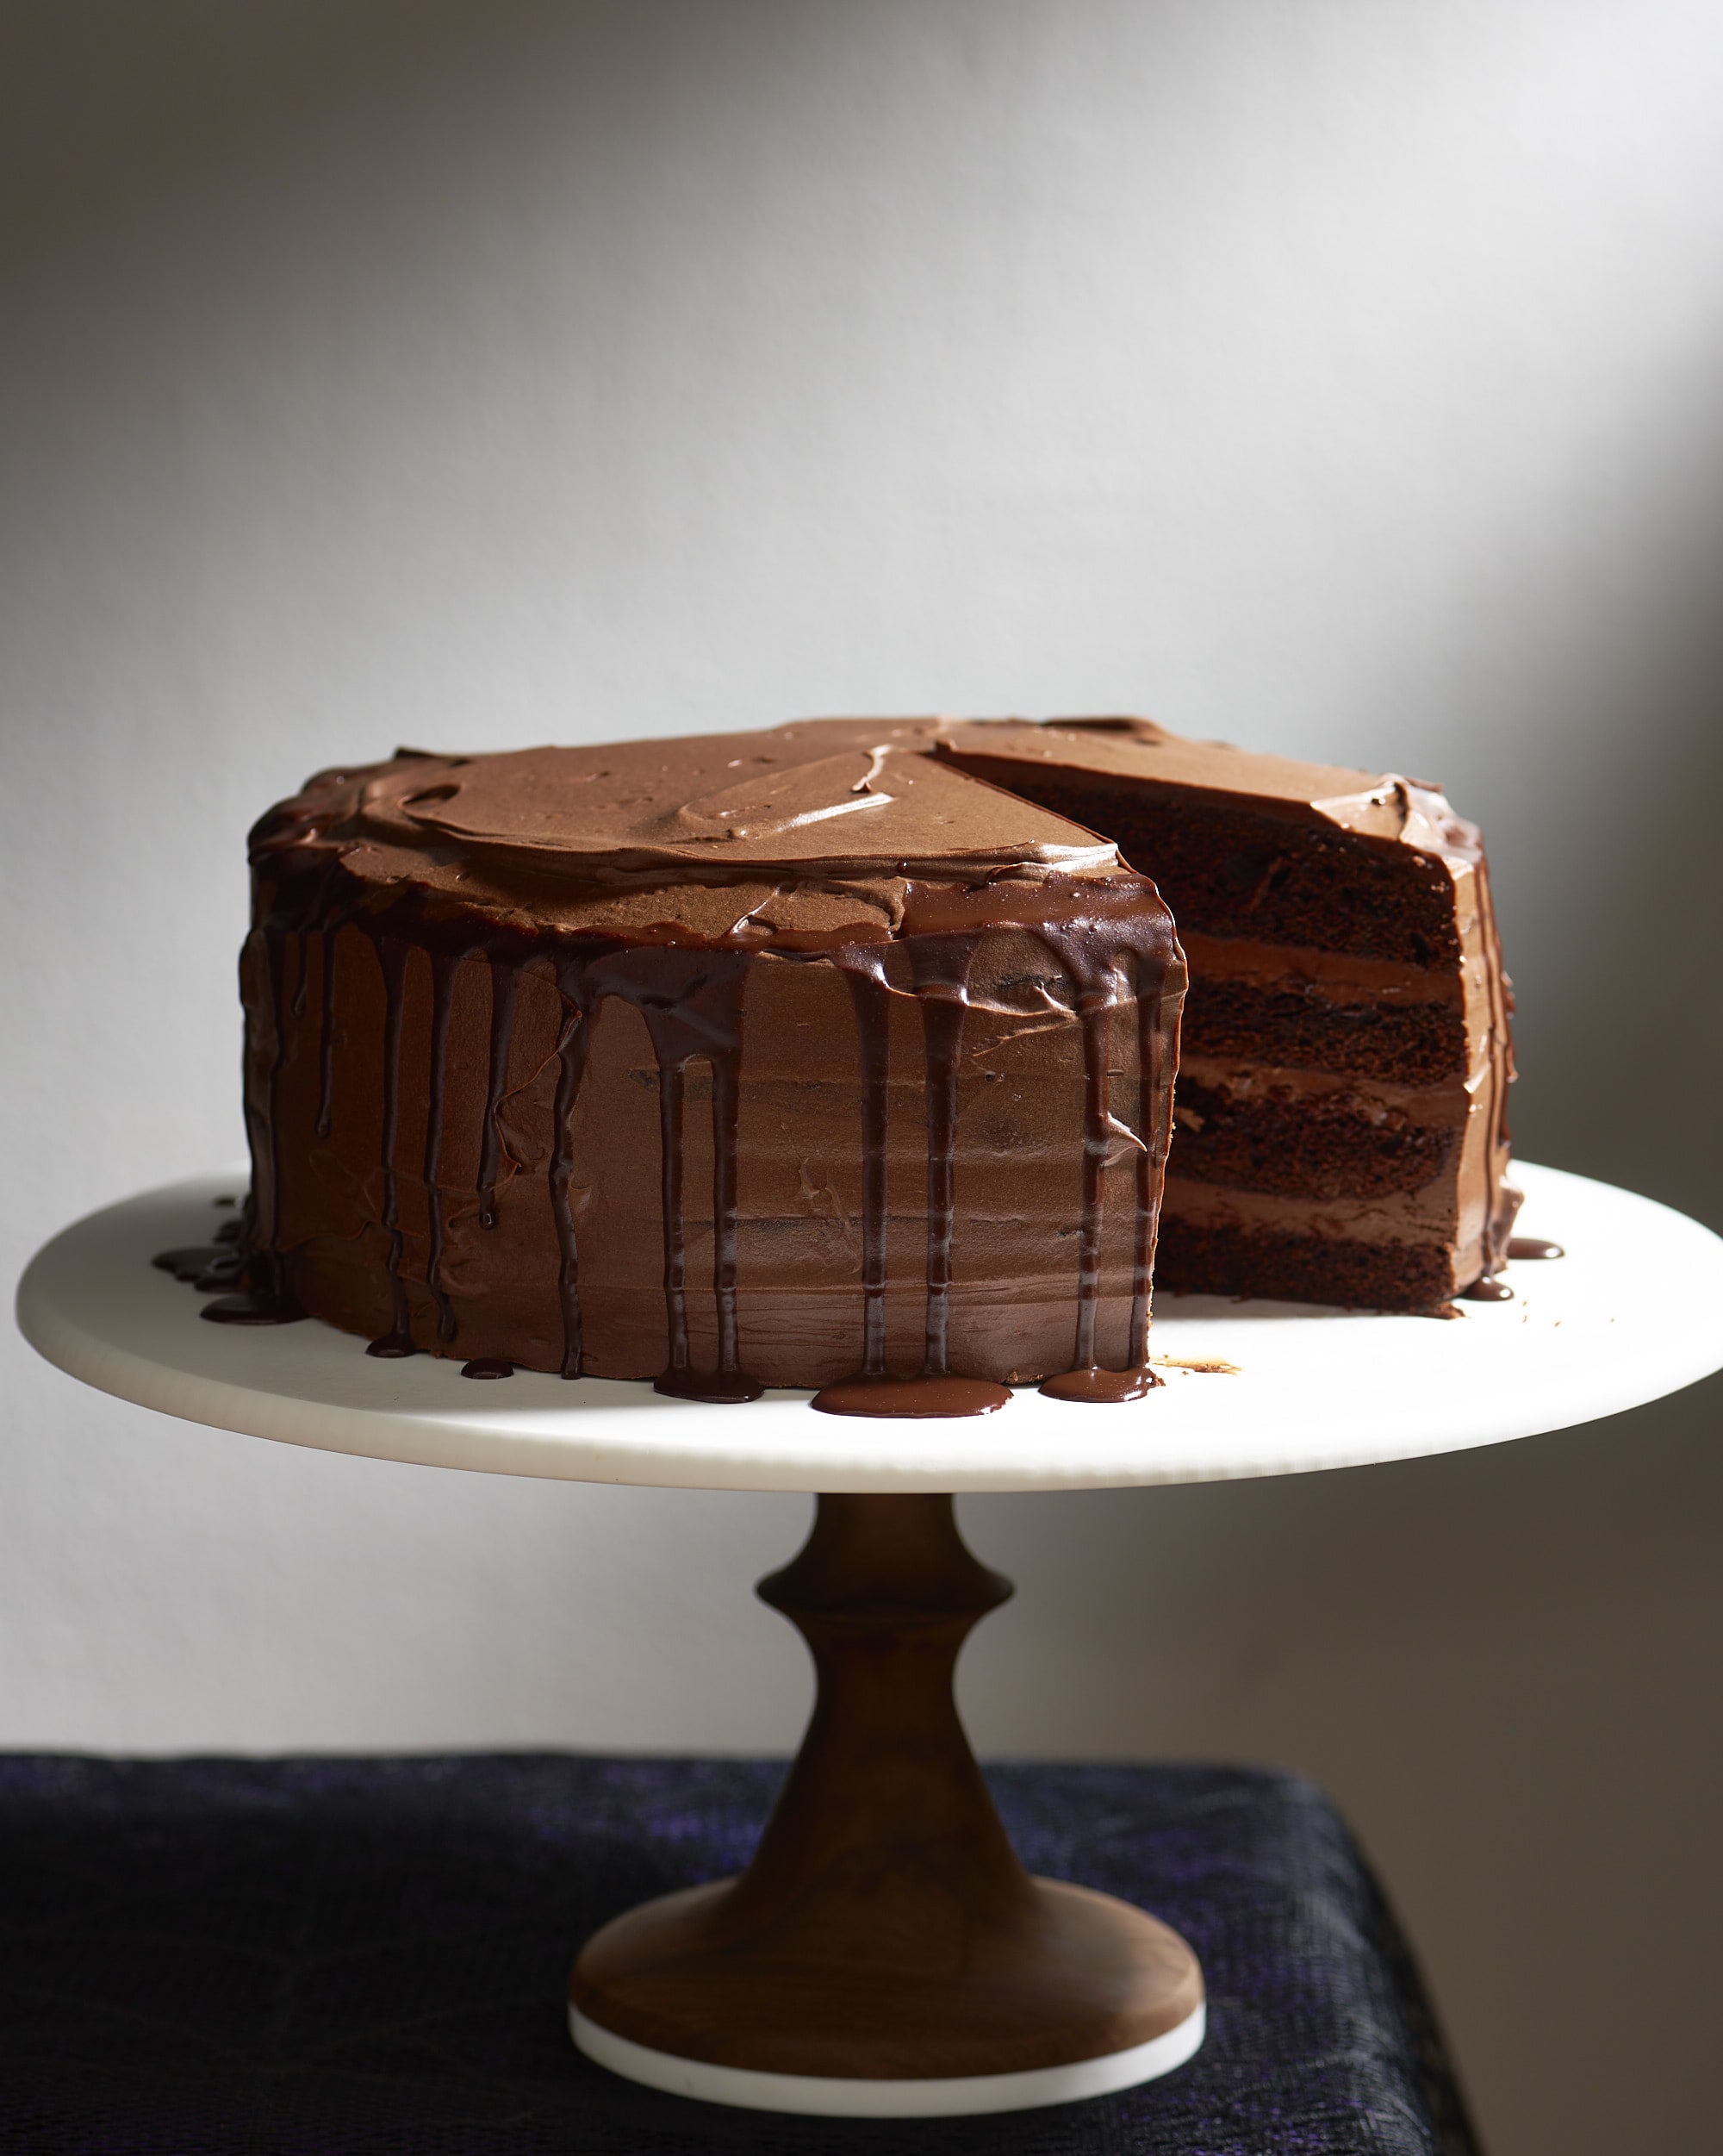 Perfect Chocolate Ganache + how to glaze a cake!